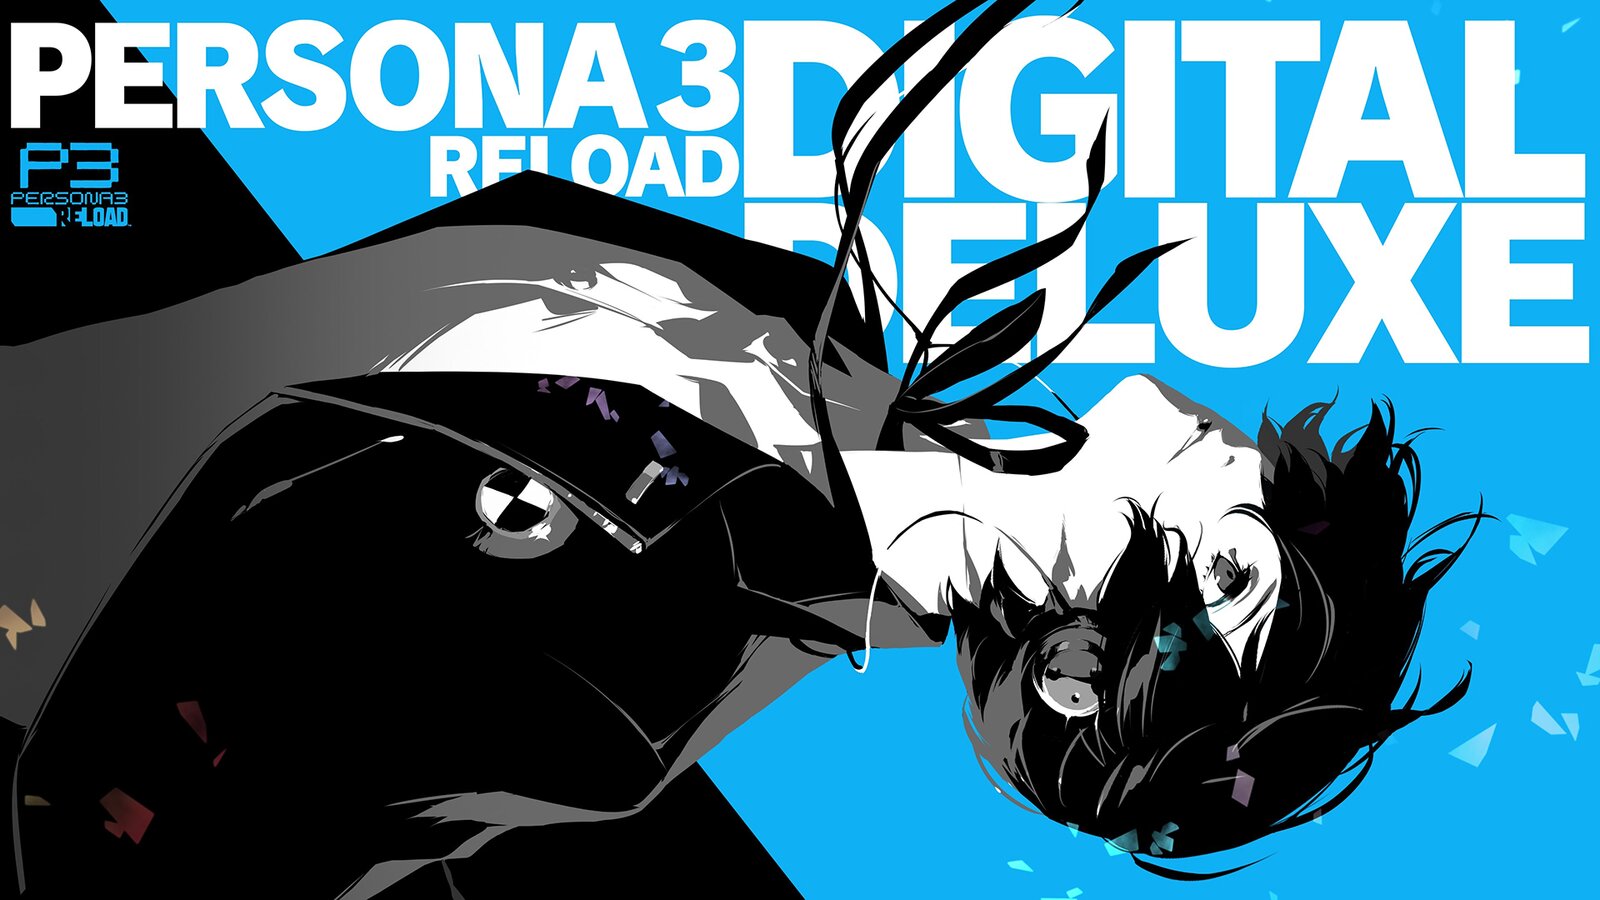 Persona 3 Reload - Digital Deluxe Edition